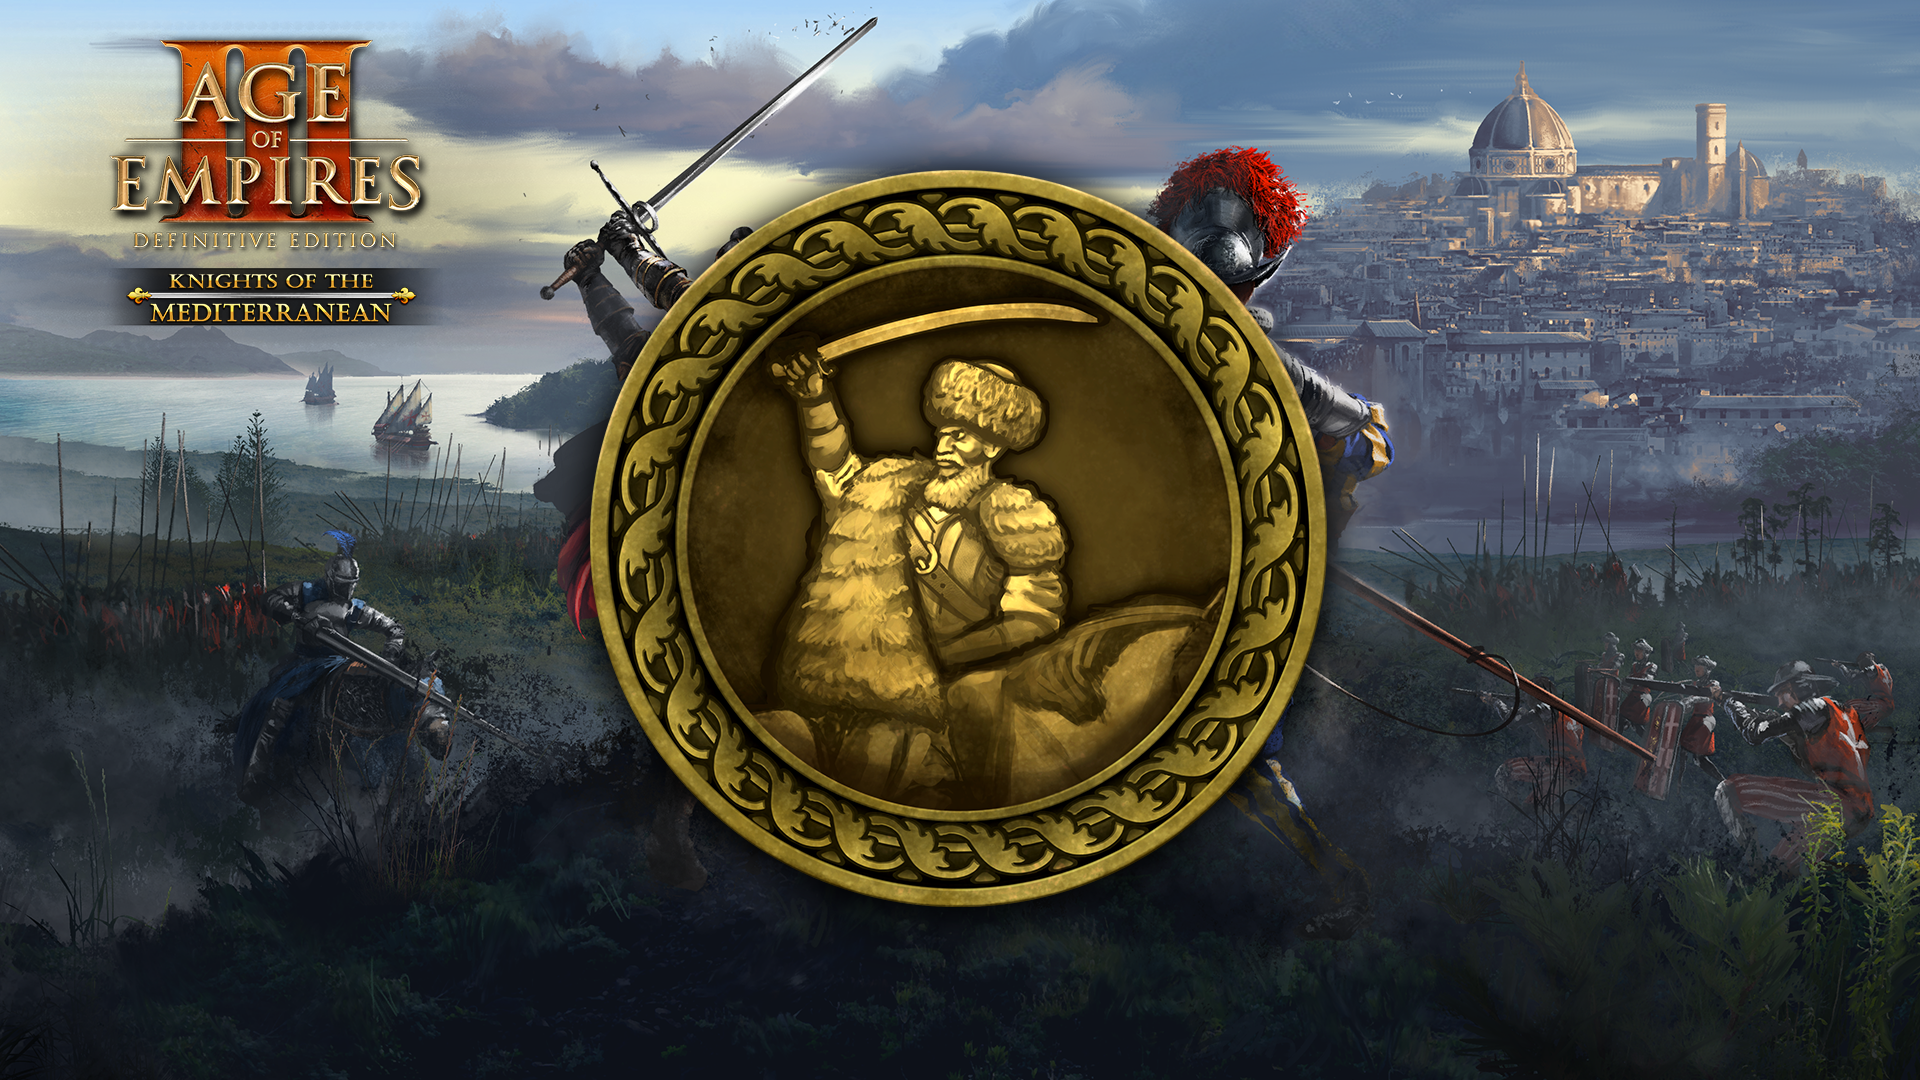 Icon for Cossack Captain